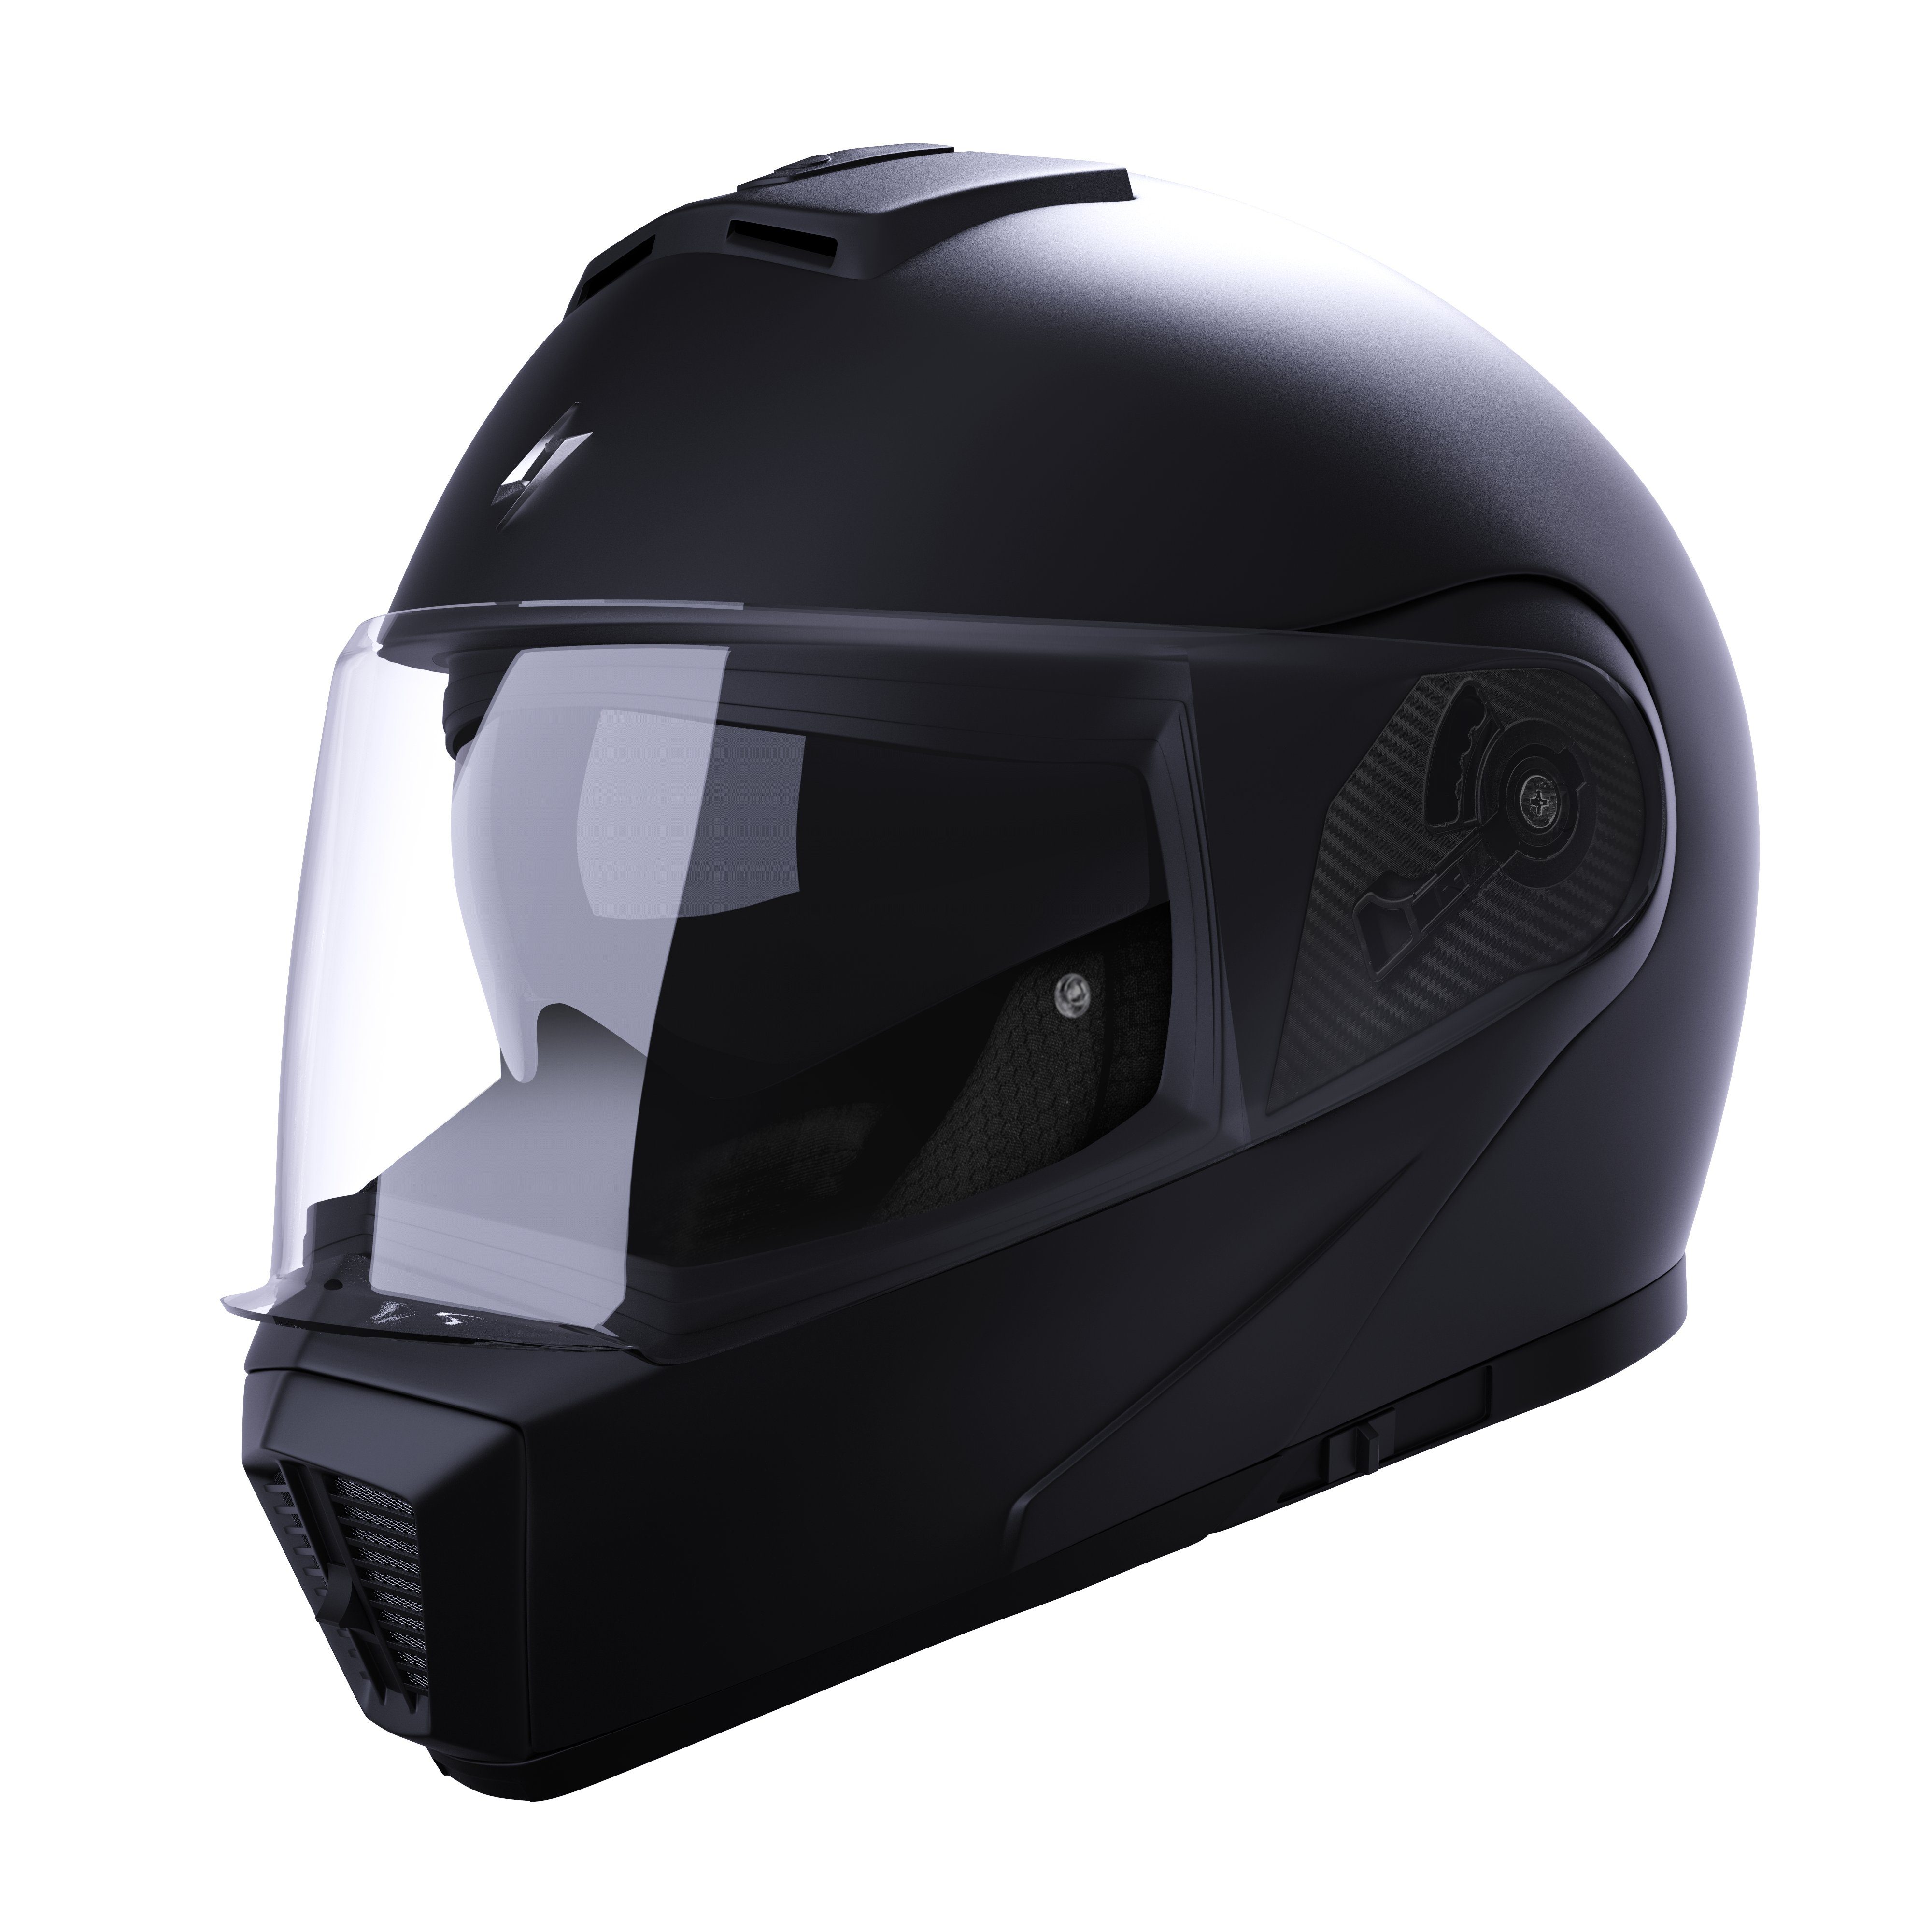 SLIDE  Stormer : Motorcycle helmets, gear and accessories